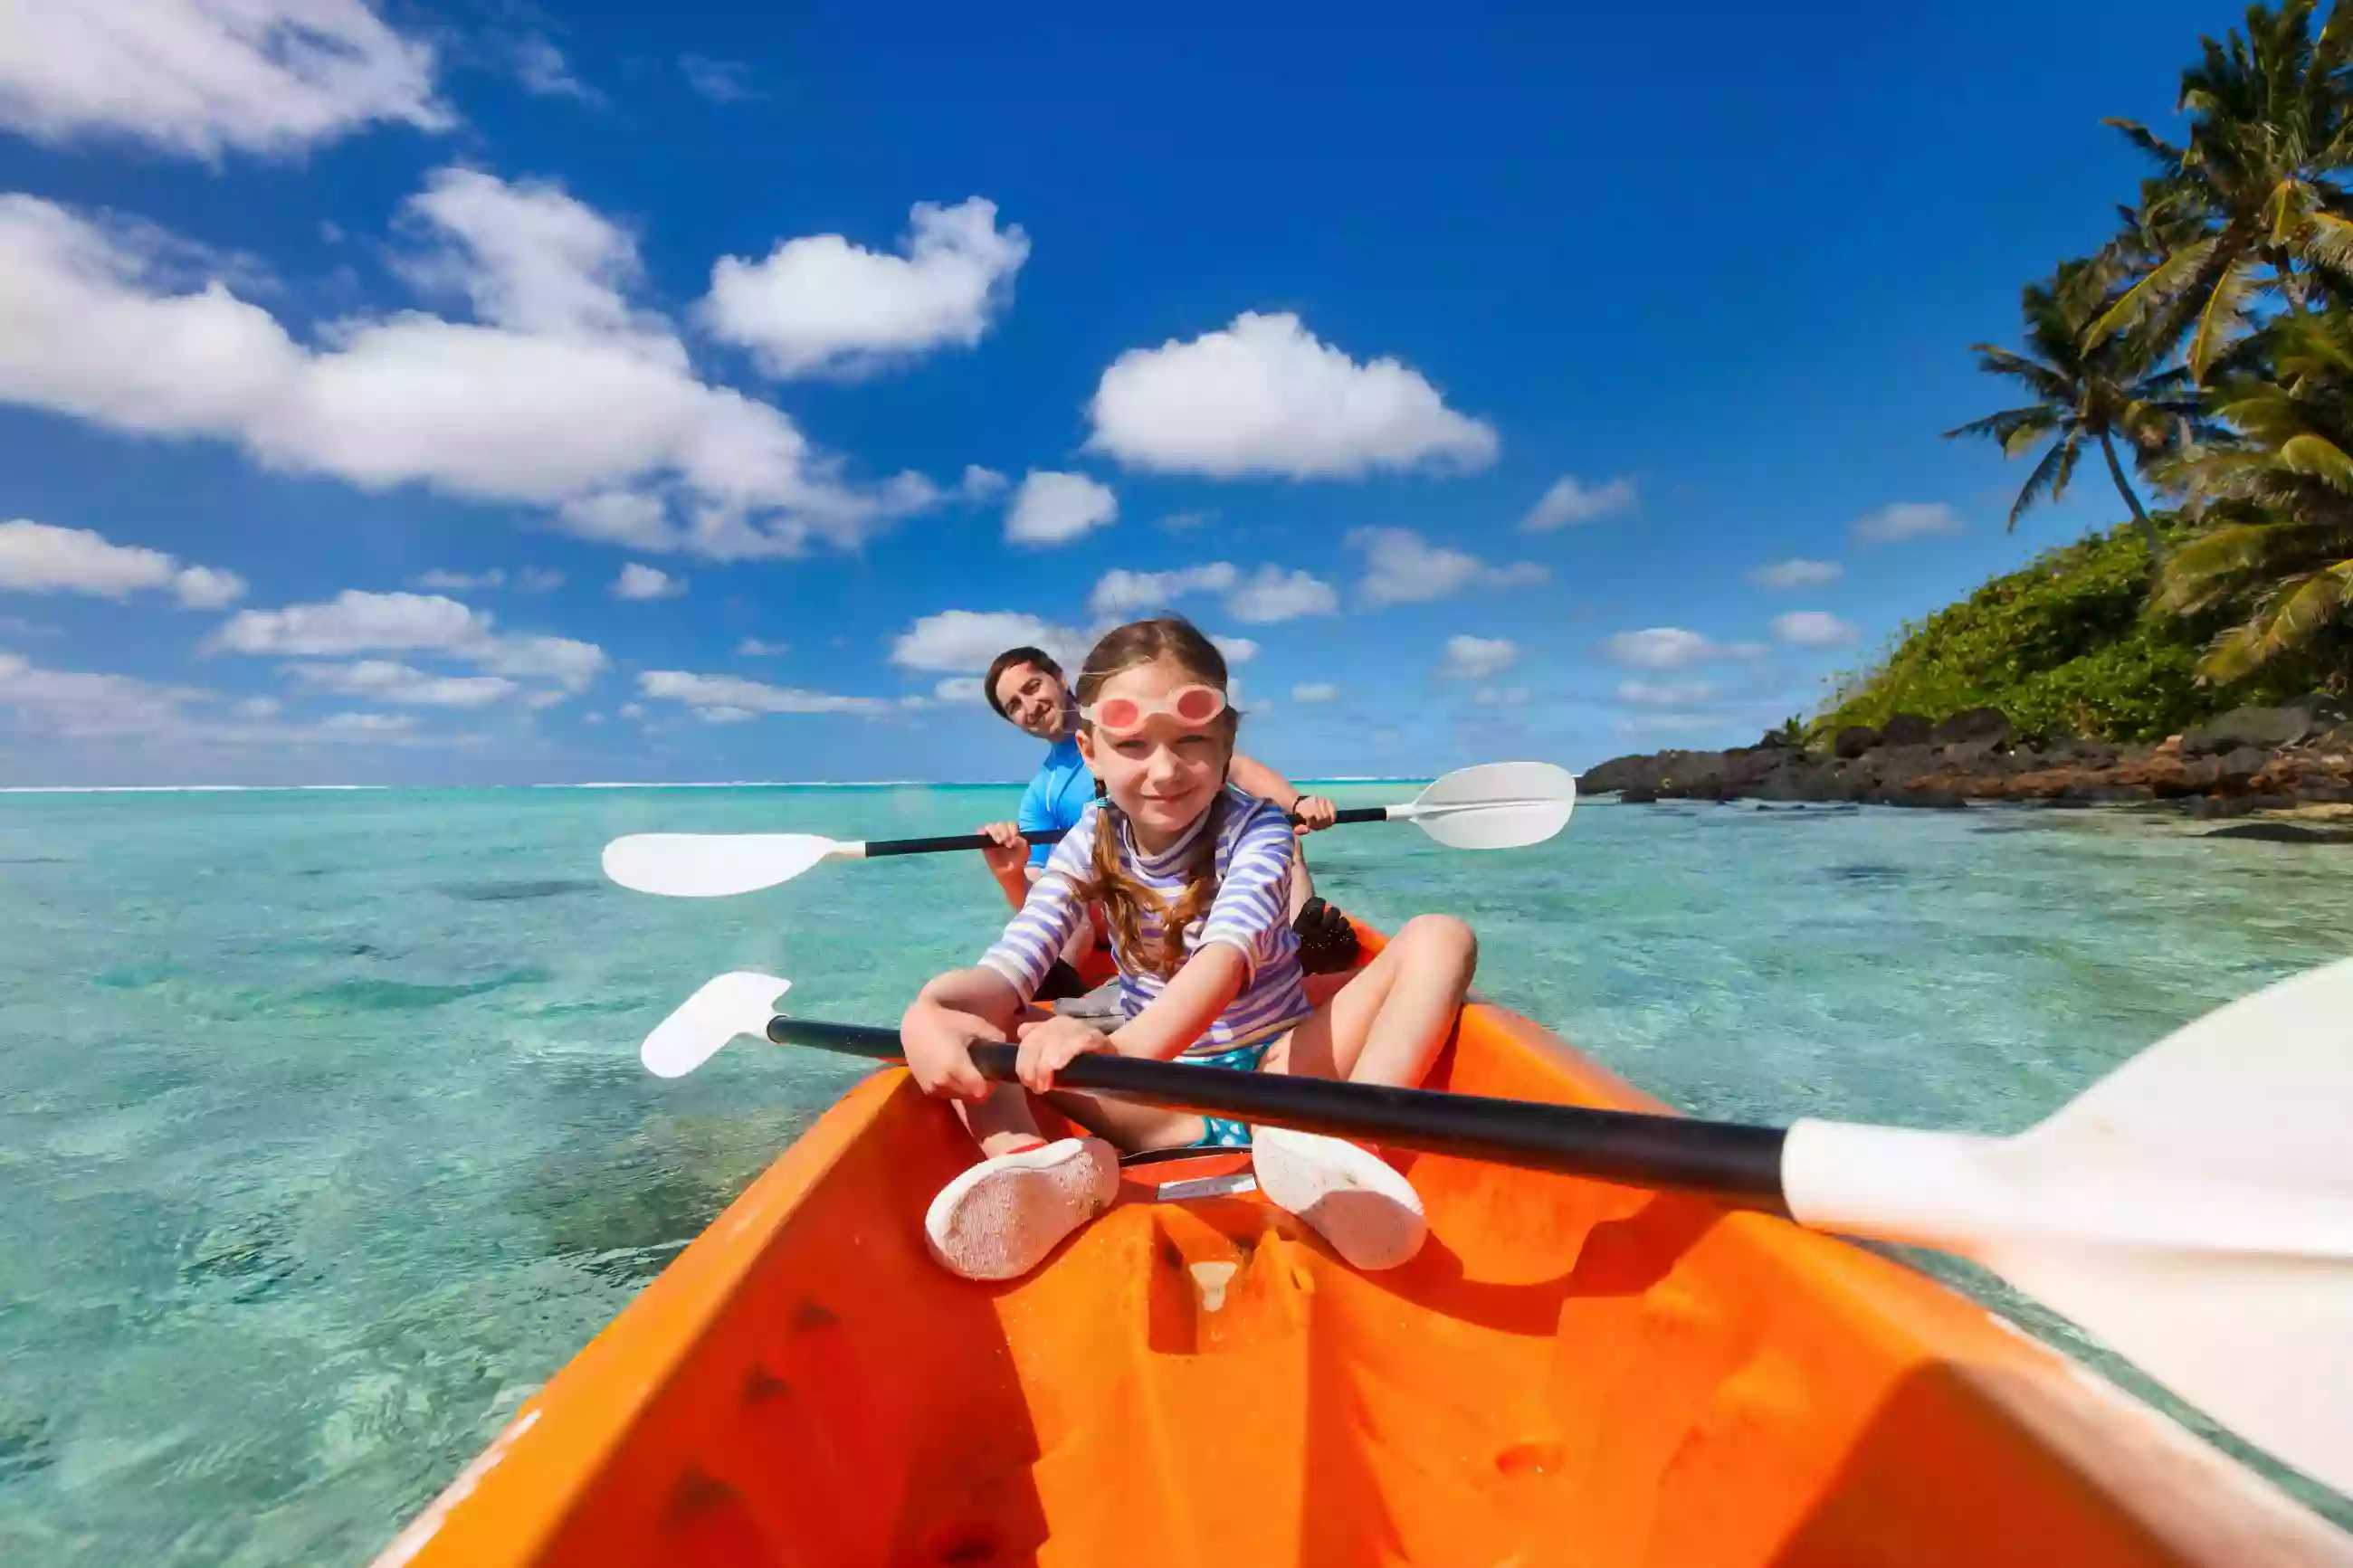 Maui Kayaks